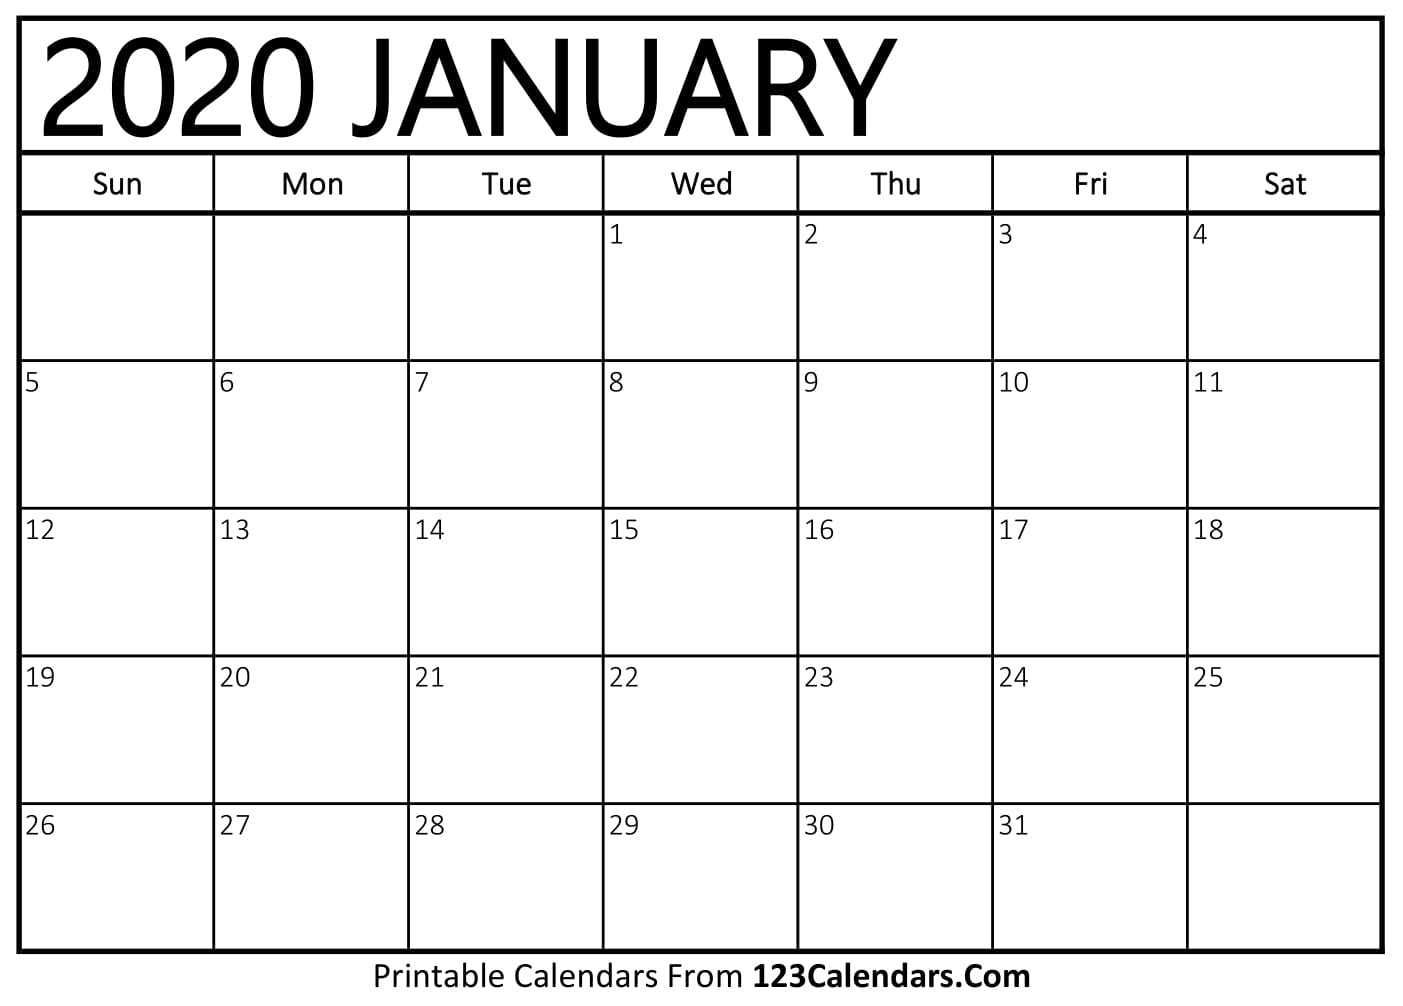 Free Printable Calendar | 123Calendars Printable Calendar That You Can Type On